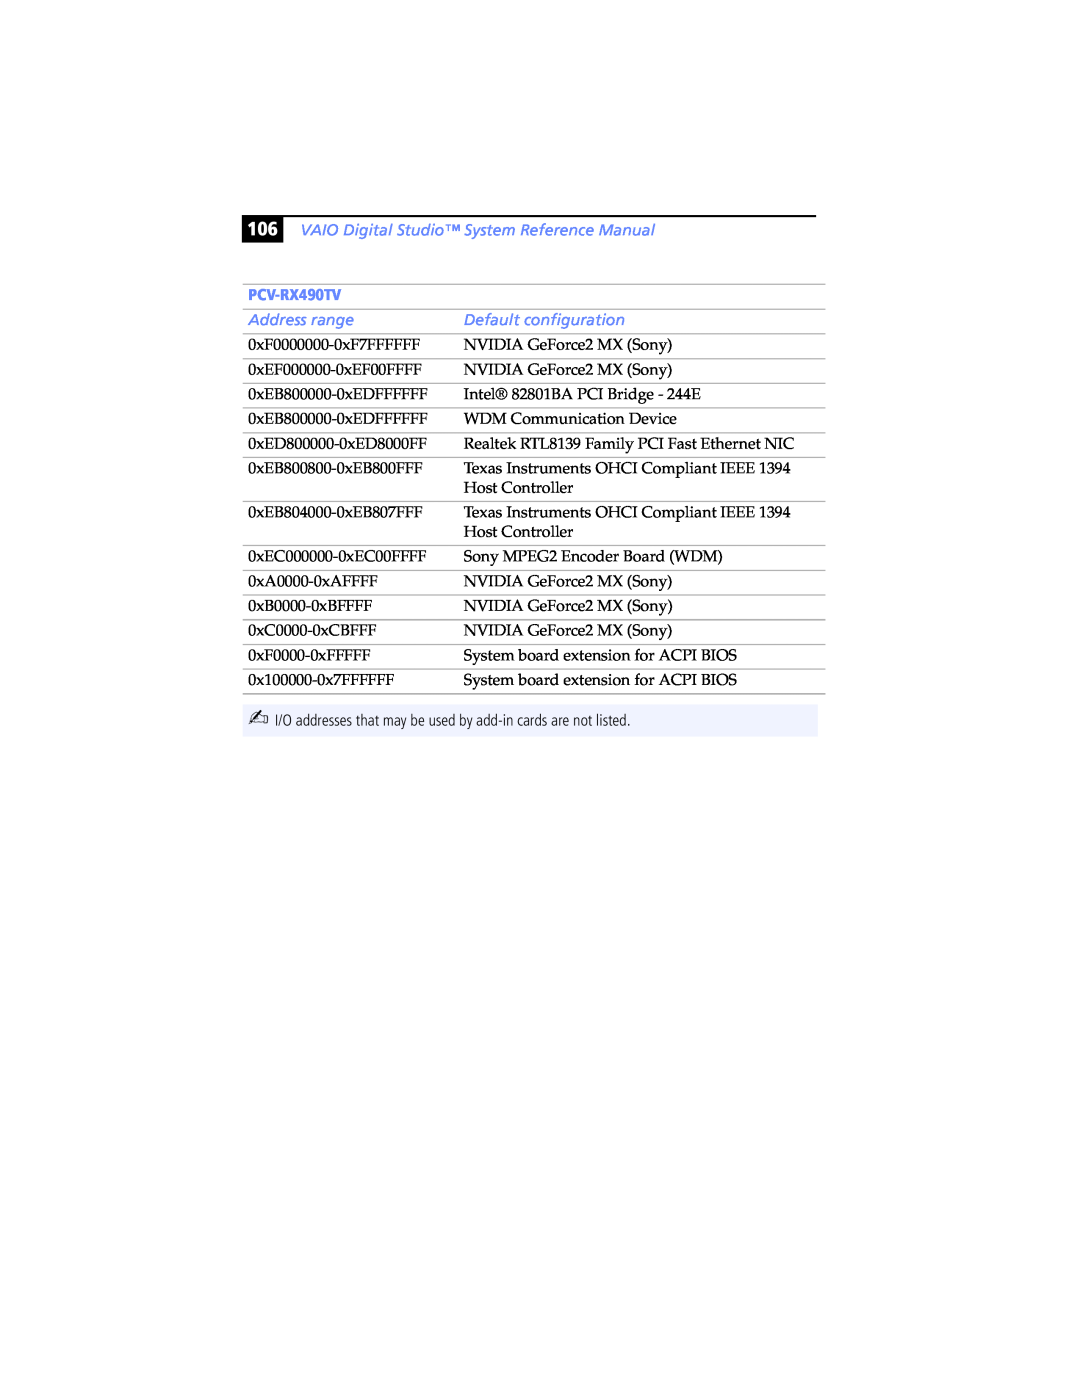 Sony PCV-RX462DS manual VAIO Digital Studio System Reference Manual, PCV-RX490TV, Address range, Default configuration 